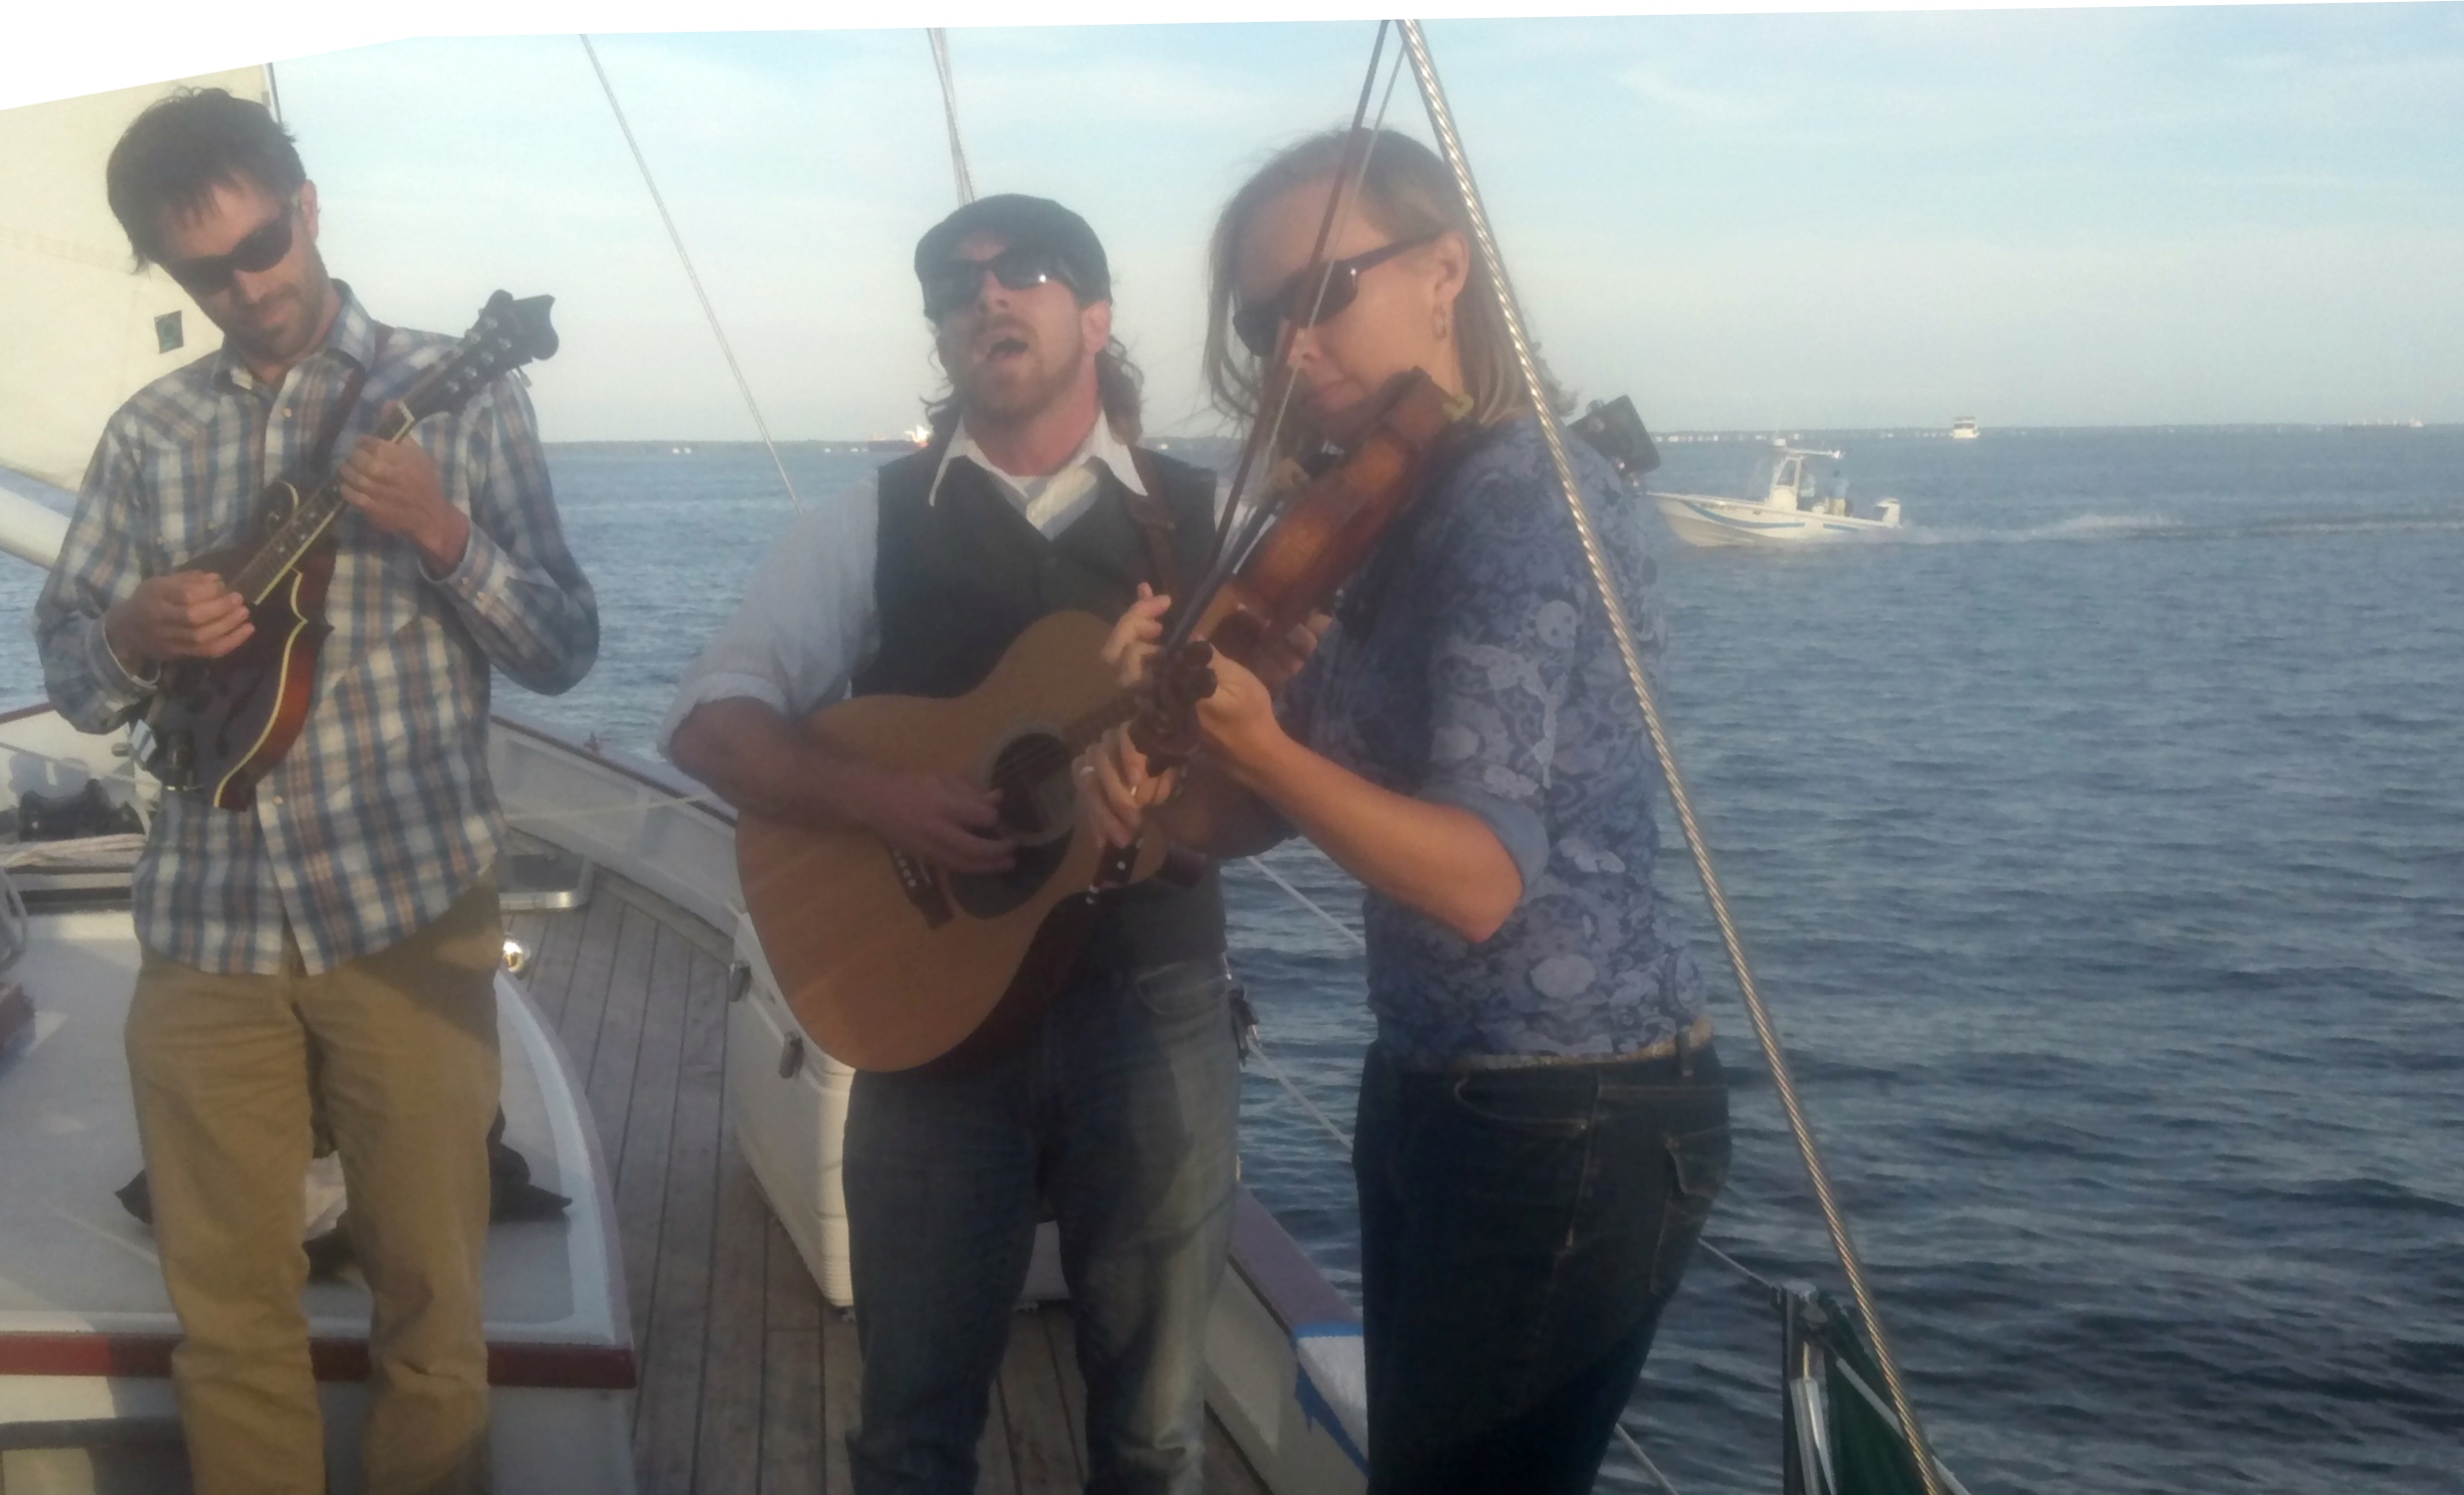 Musicians entertain on the schooner